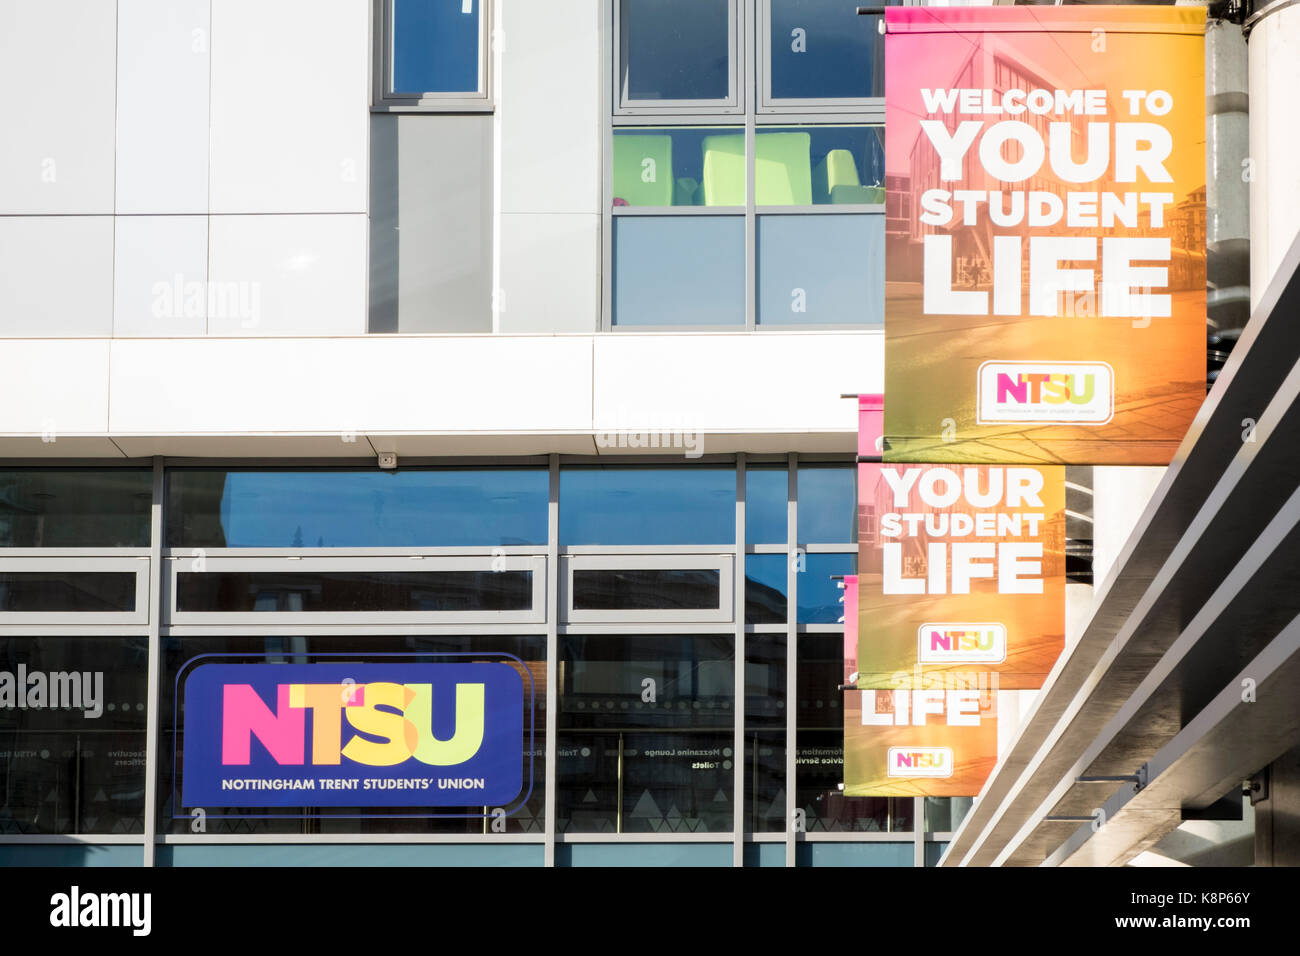 La Nottingham Trent Students' Union (NTSU), Nottingham Trent University, Nottingham, England, UK Banque D'Images